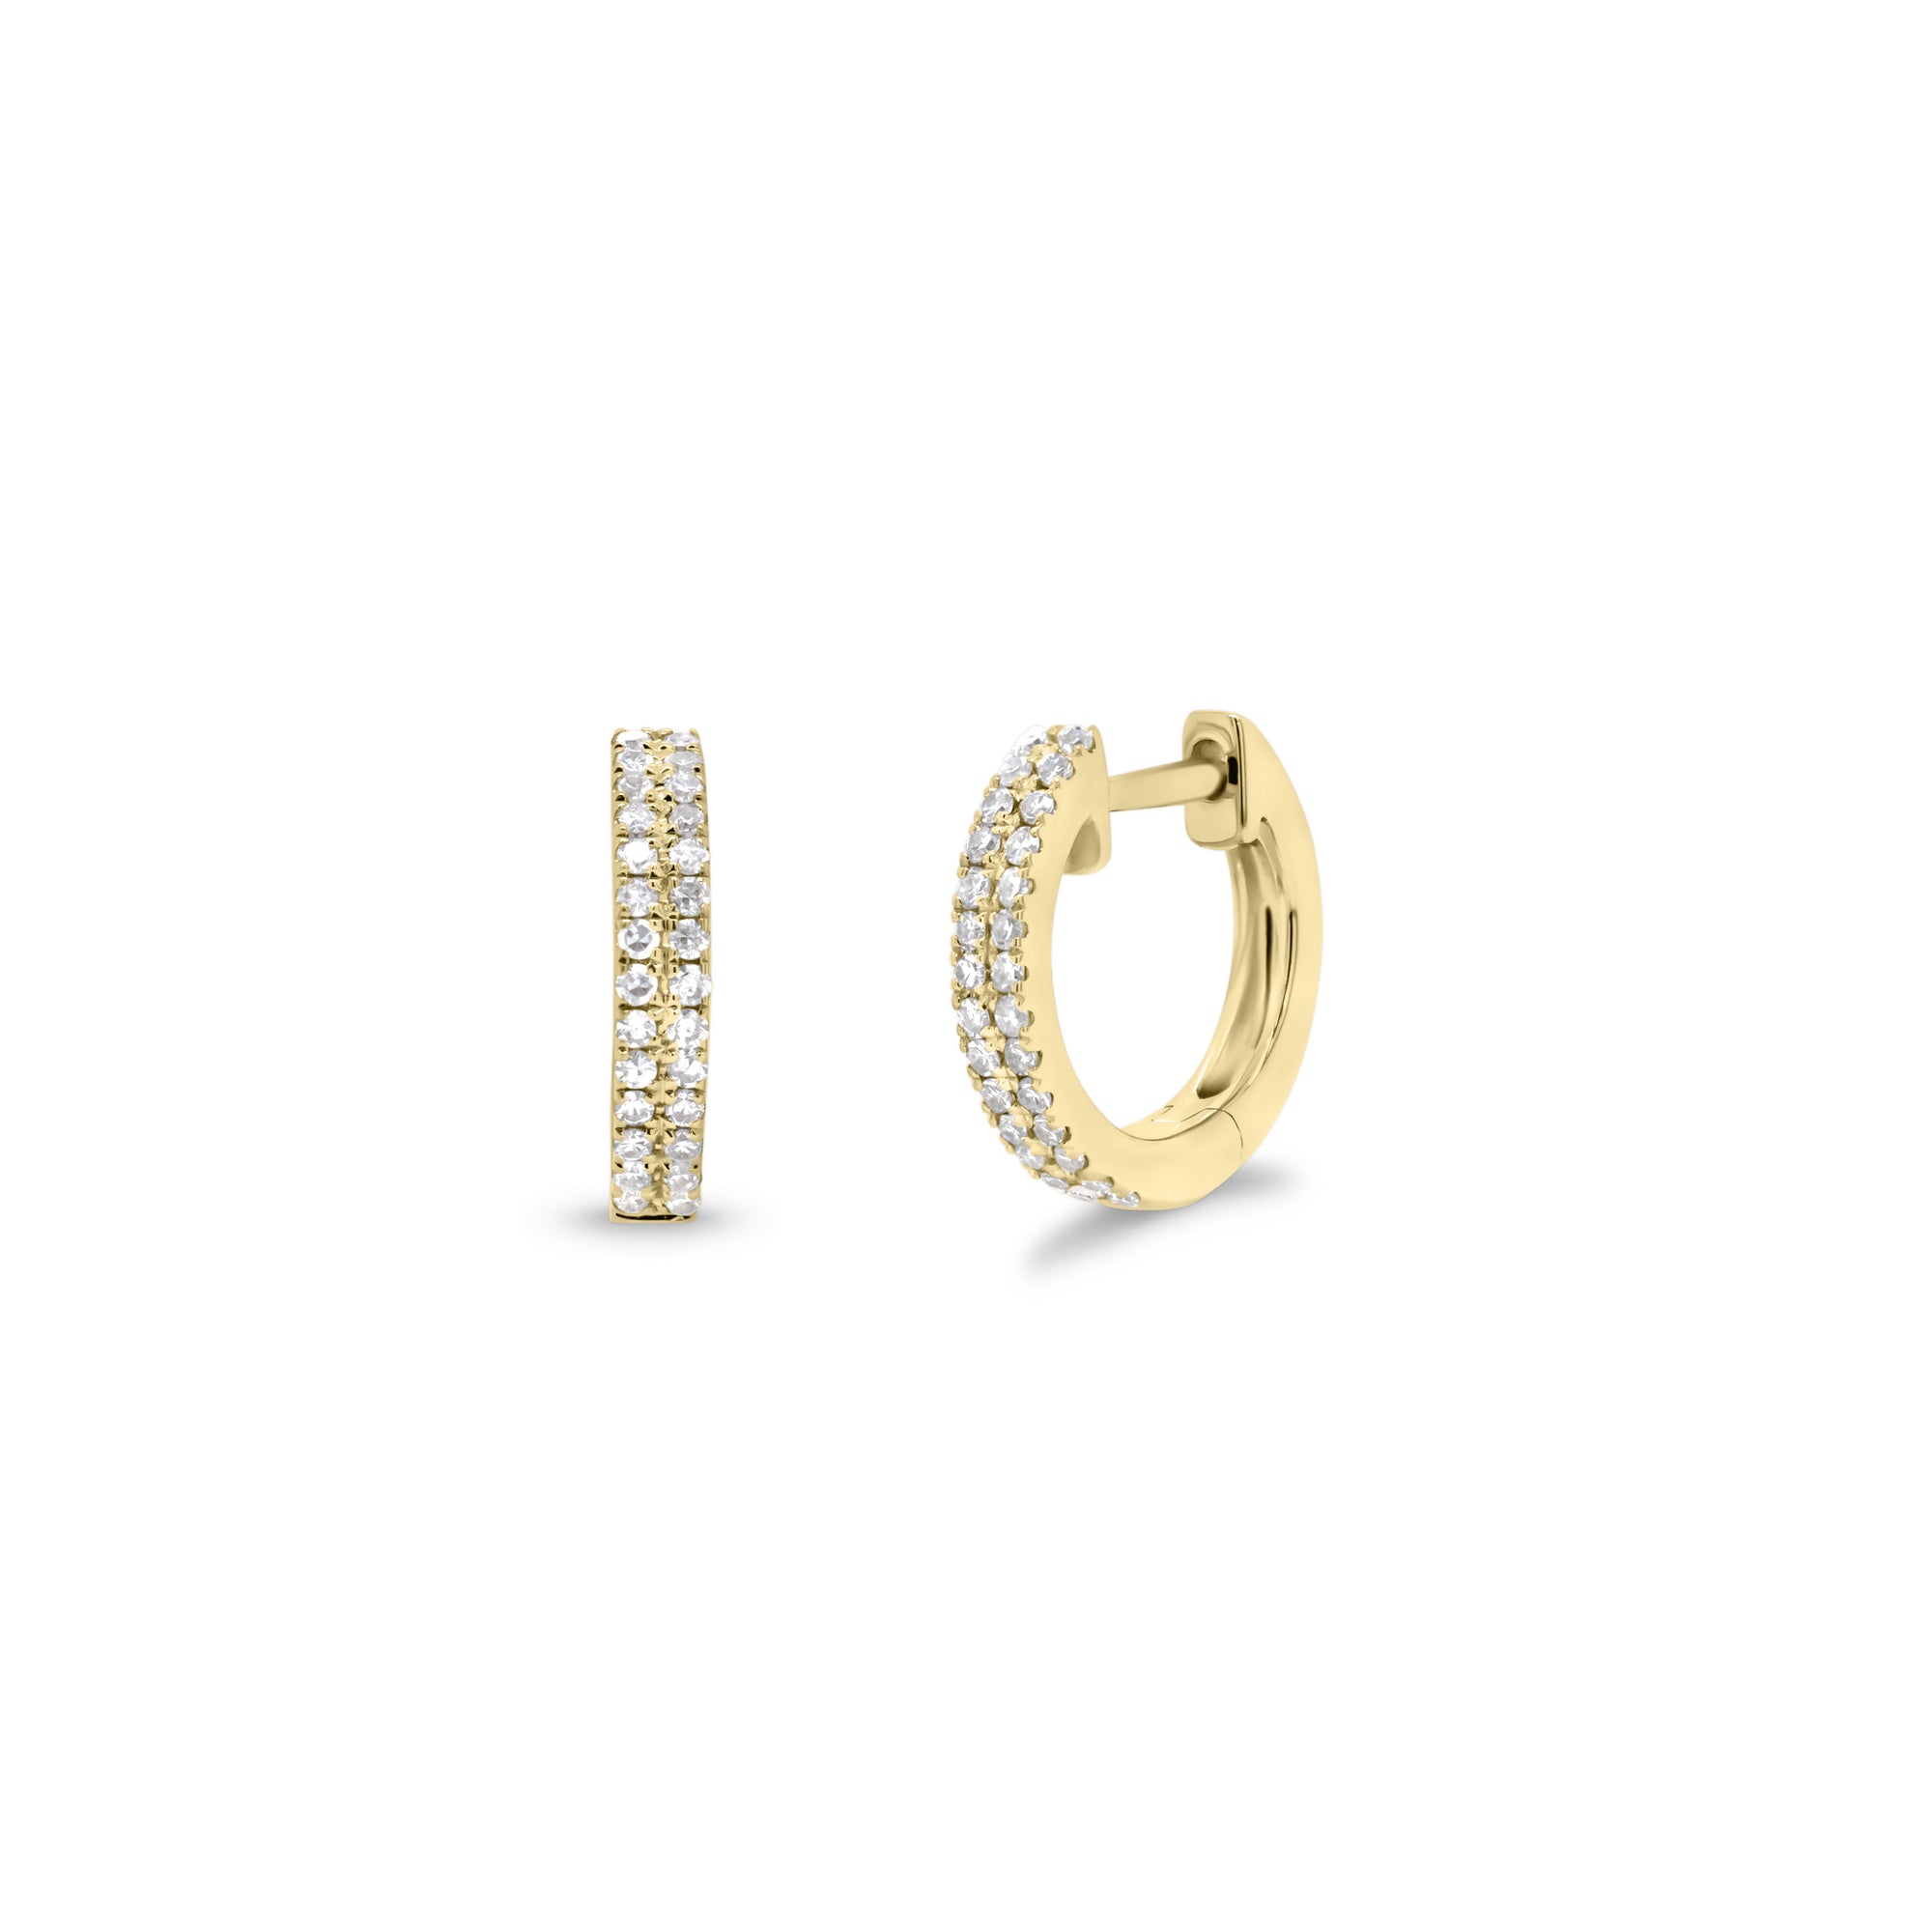 Double Row Diamond Huggie Earrings - 14K gold weighing 1.40 grams  - 56 round diamonds weighing 0.12 carats